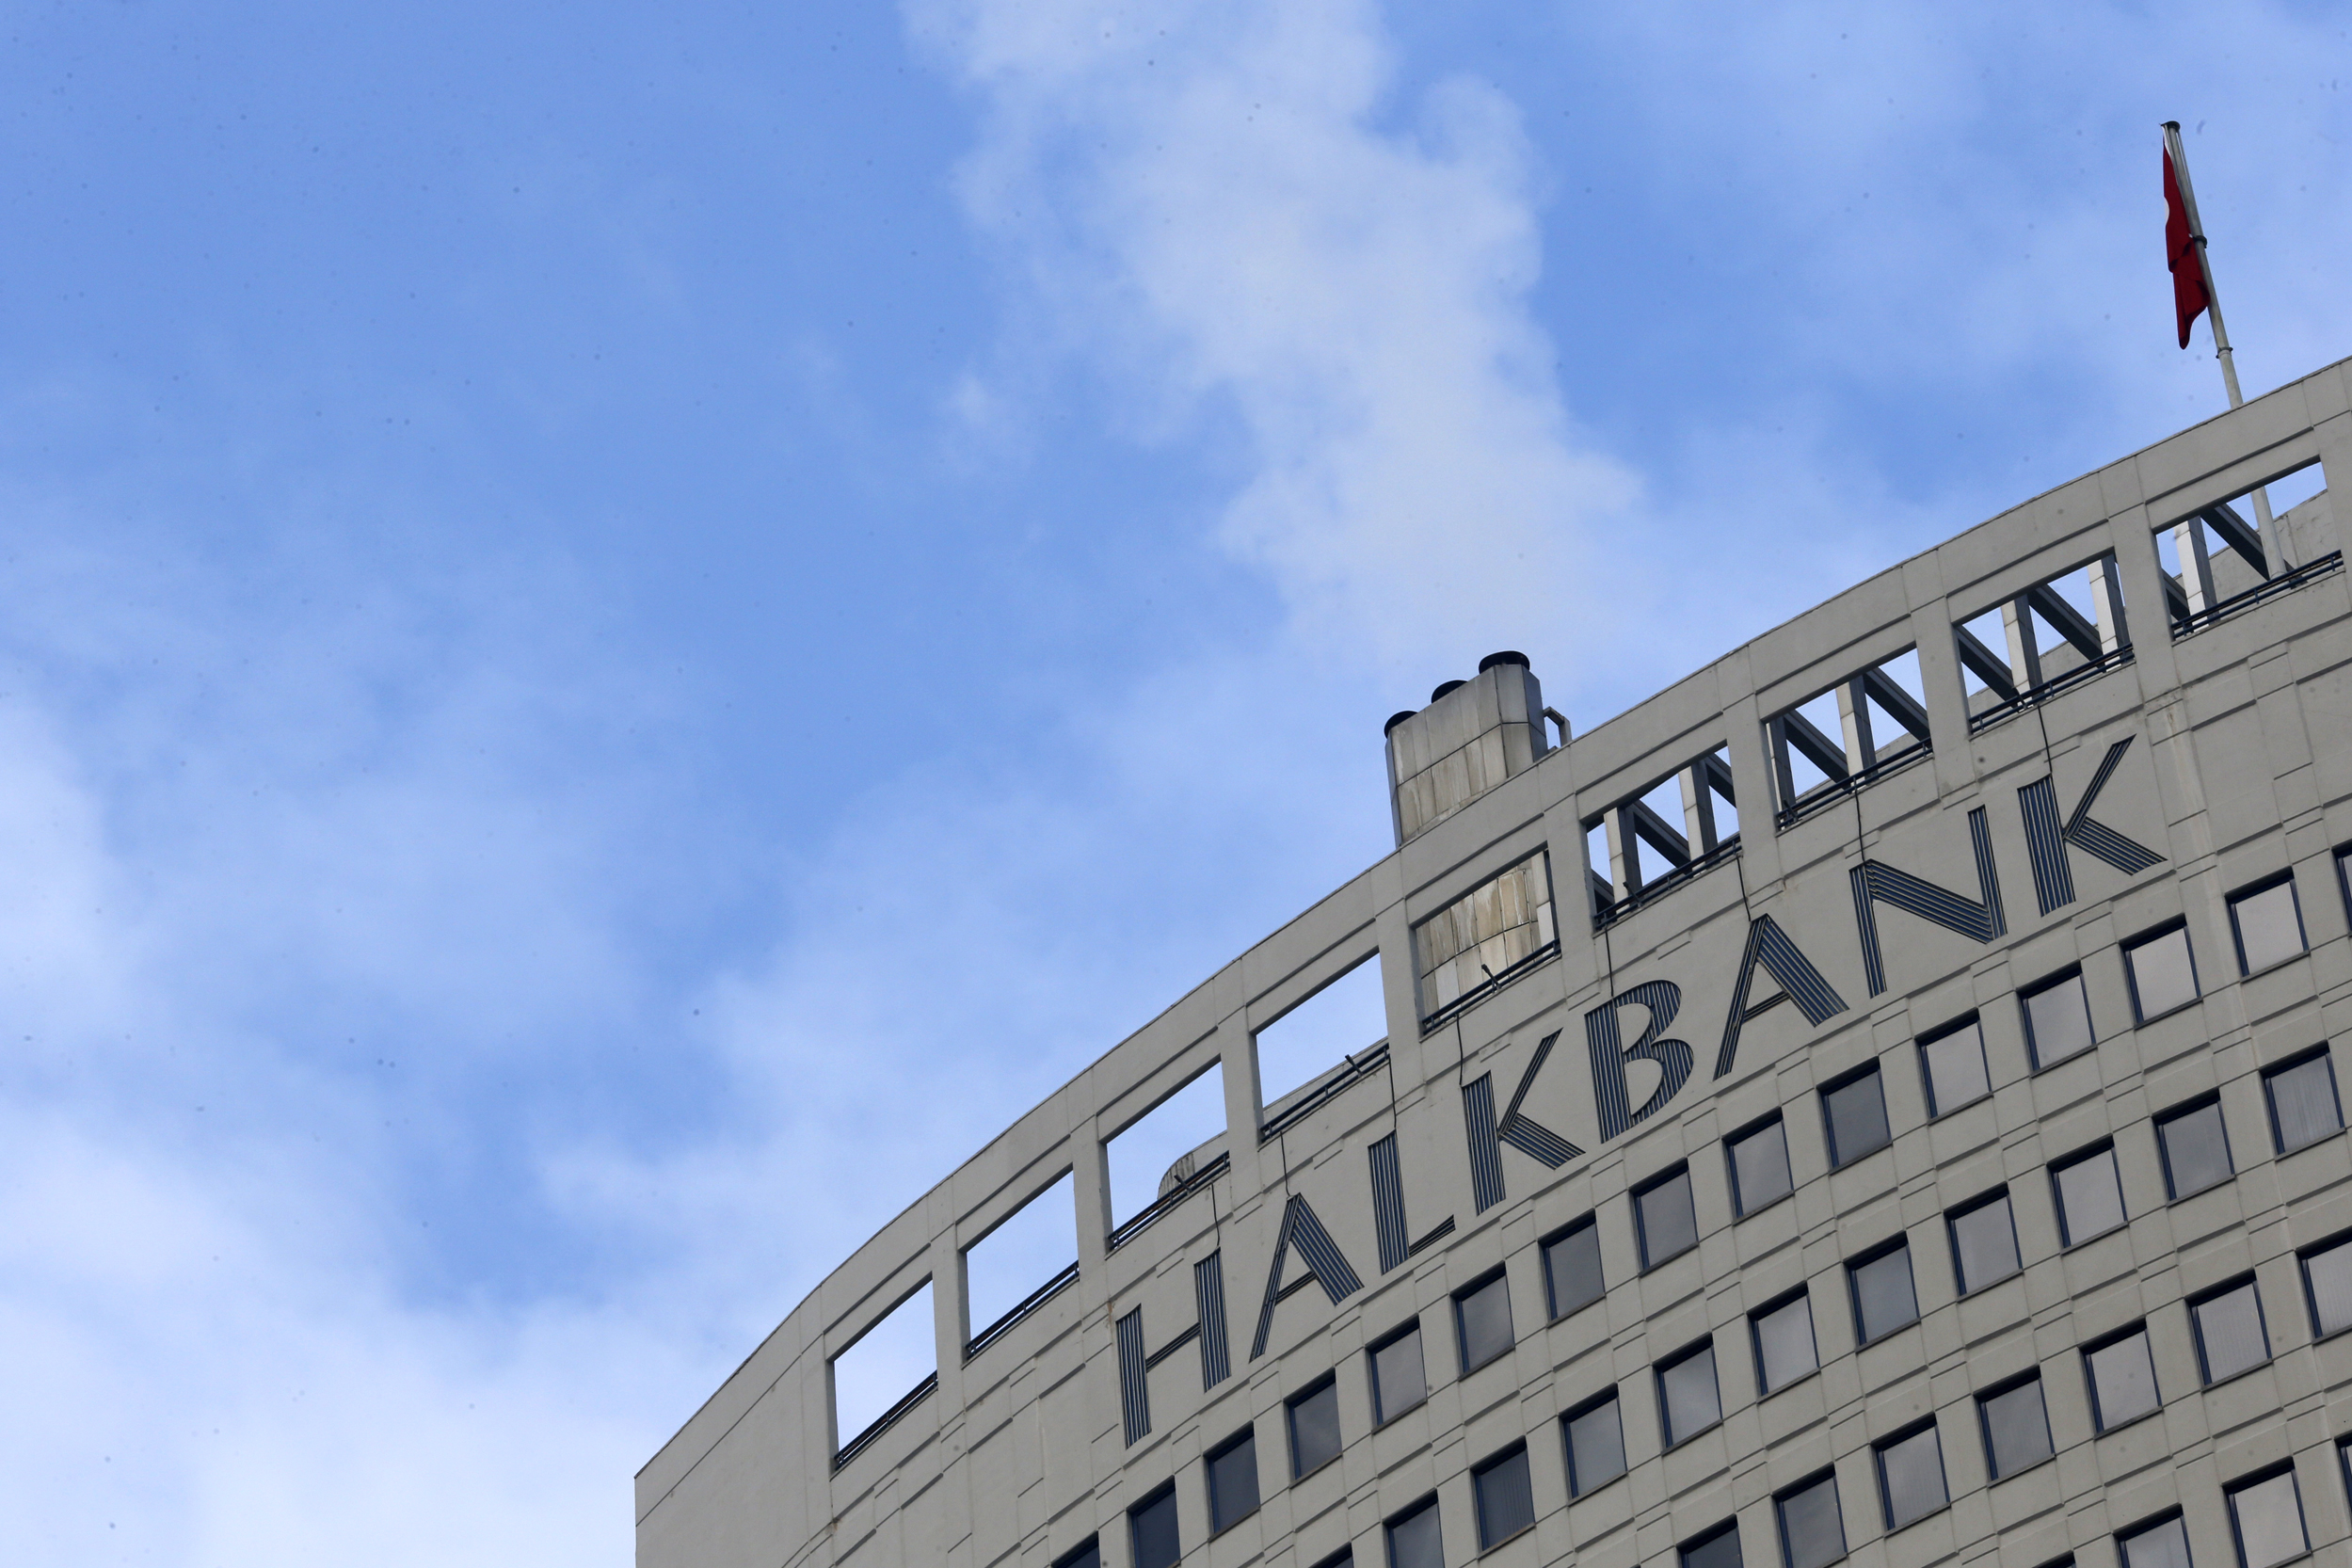 Turkey's Halkbank headquarters are seen in Ankara